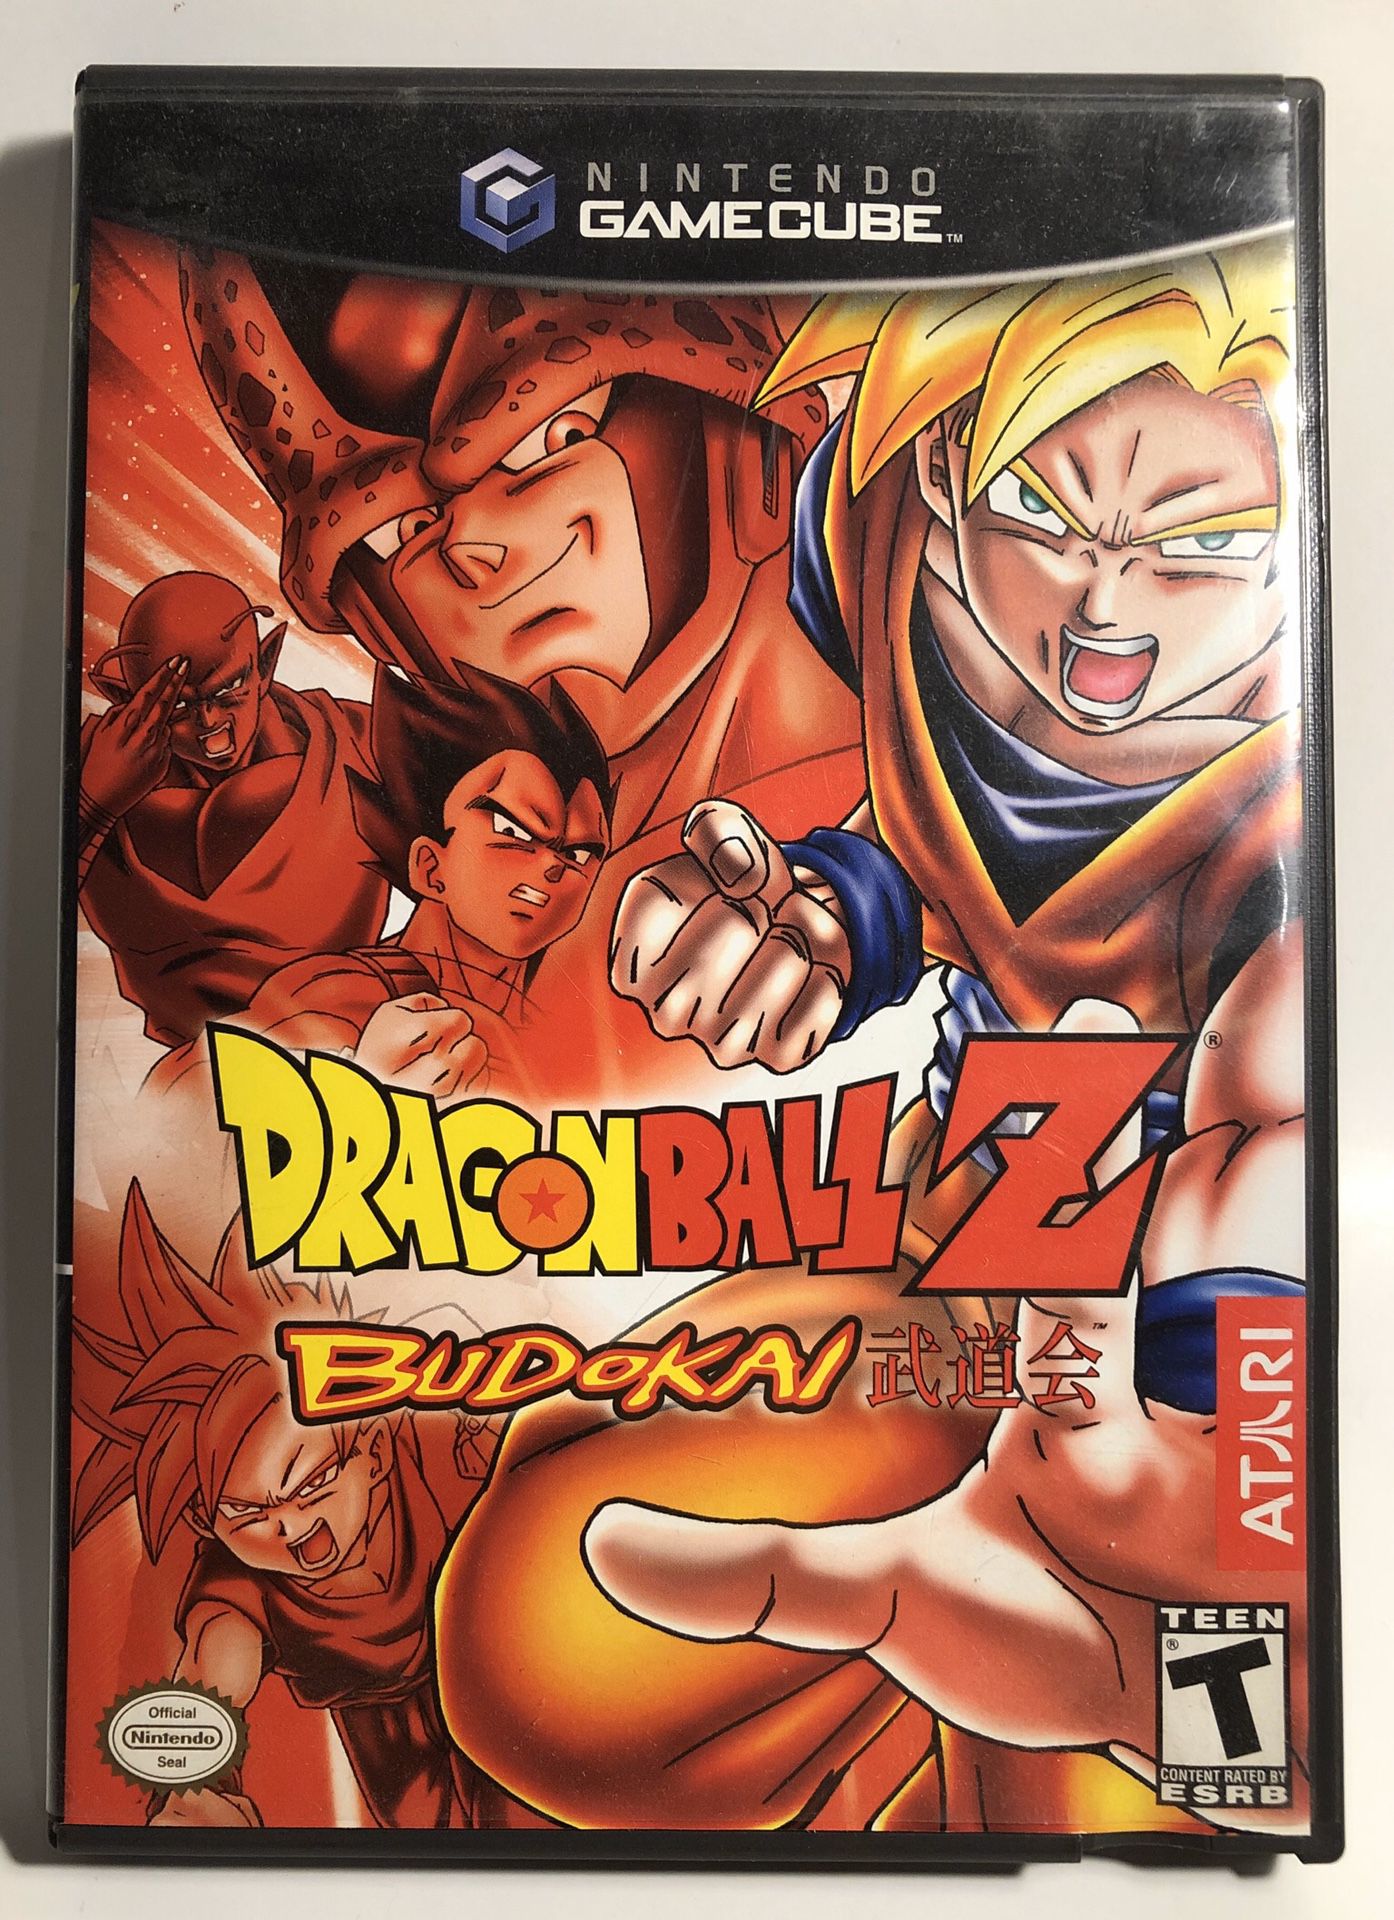 Dragon Ball Z:Budokai Nintendo GameCube Disc and Manual Tested Works